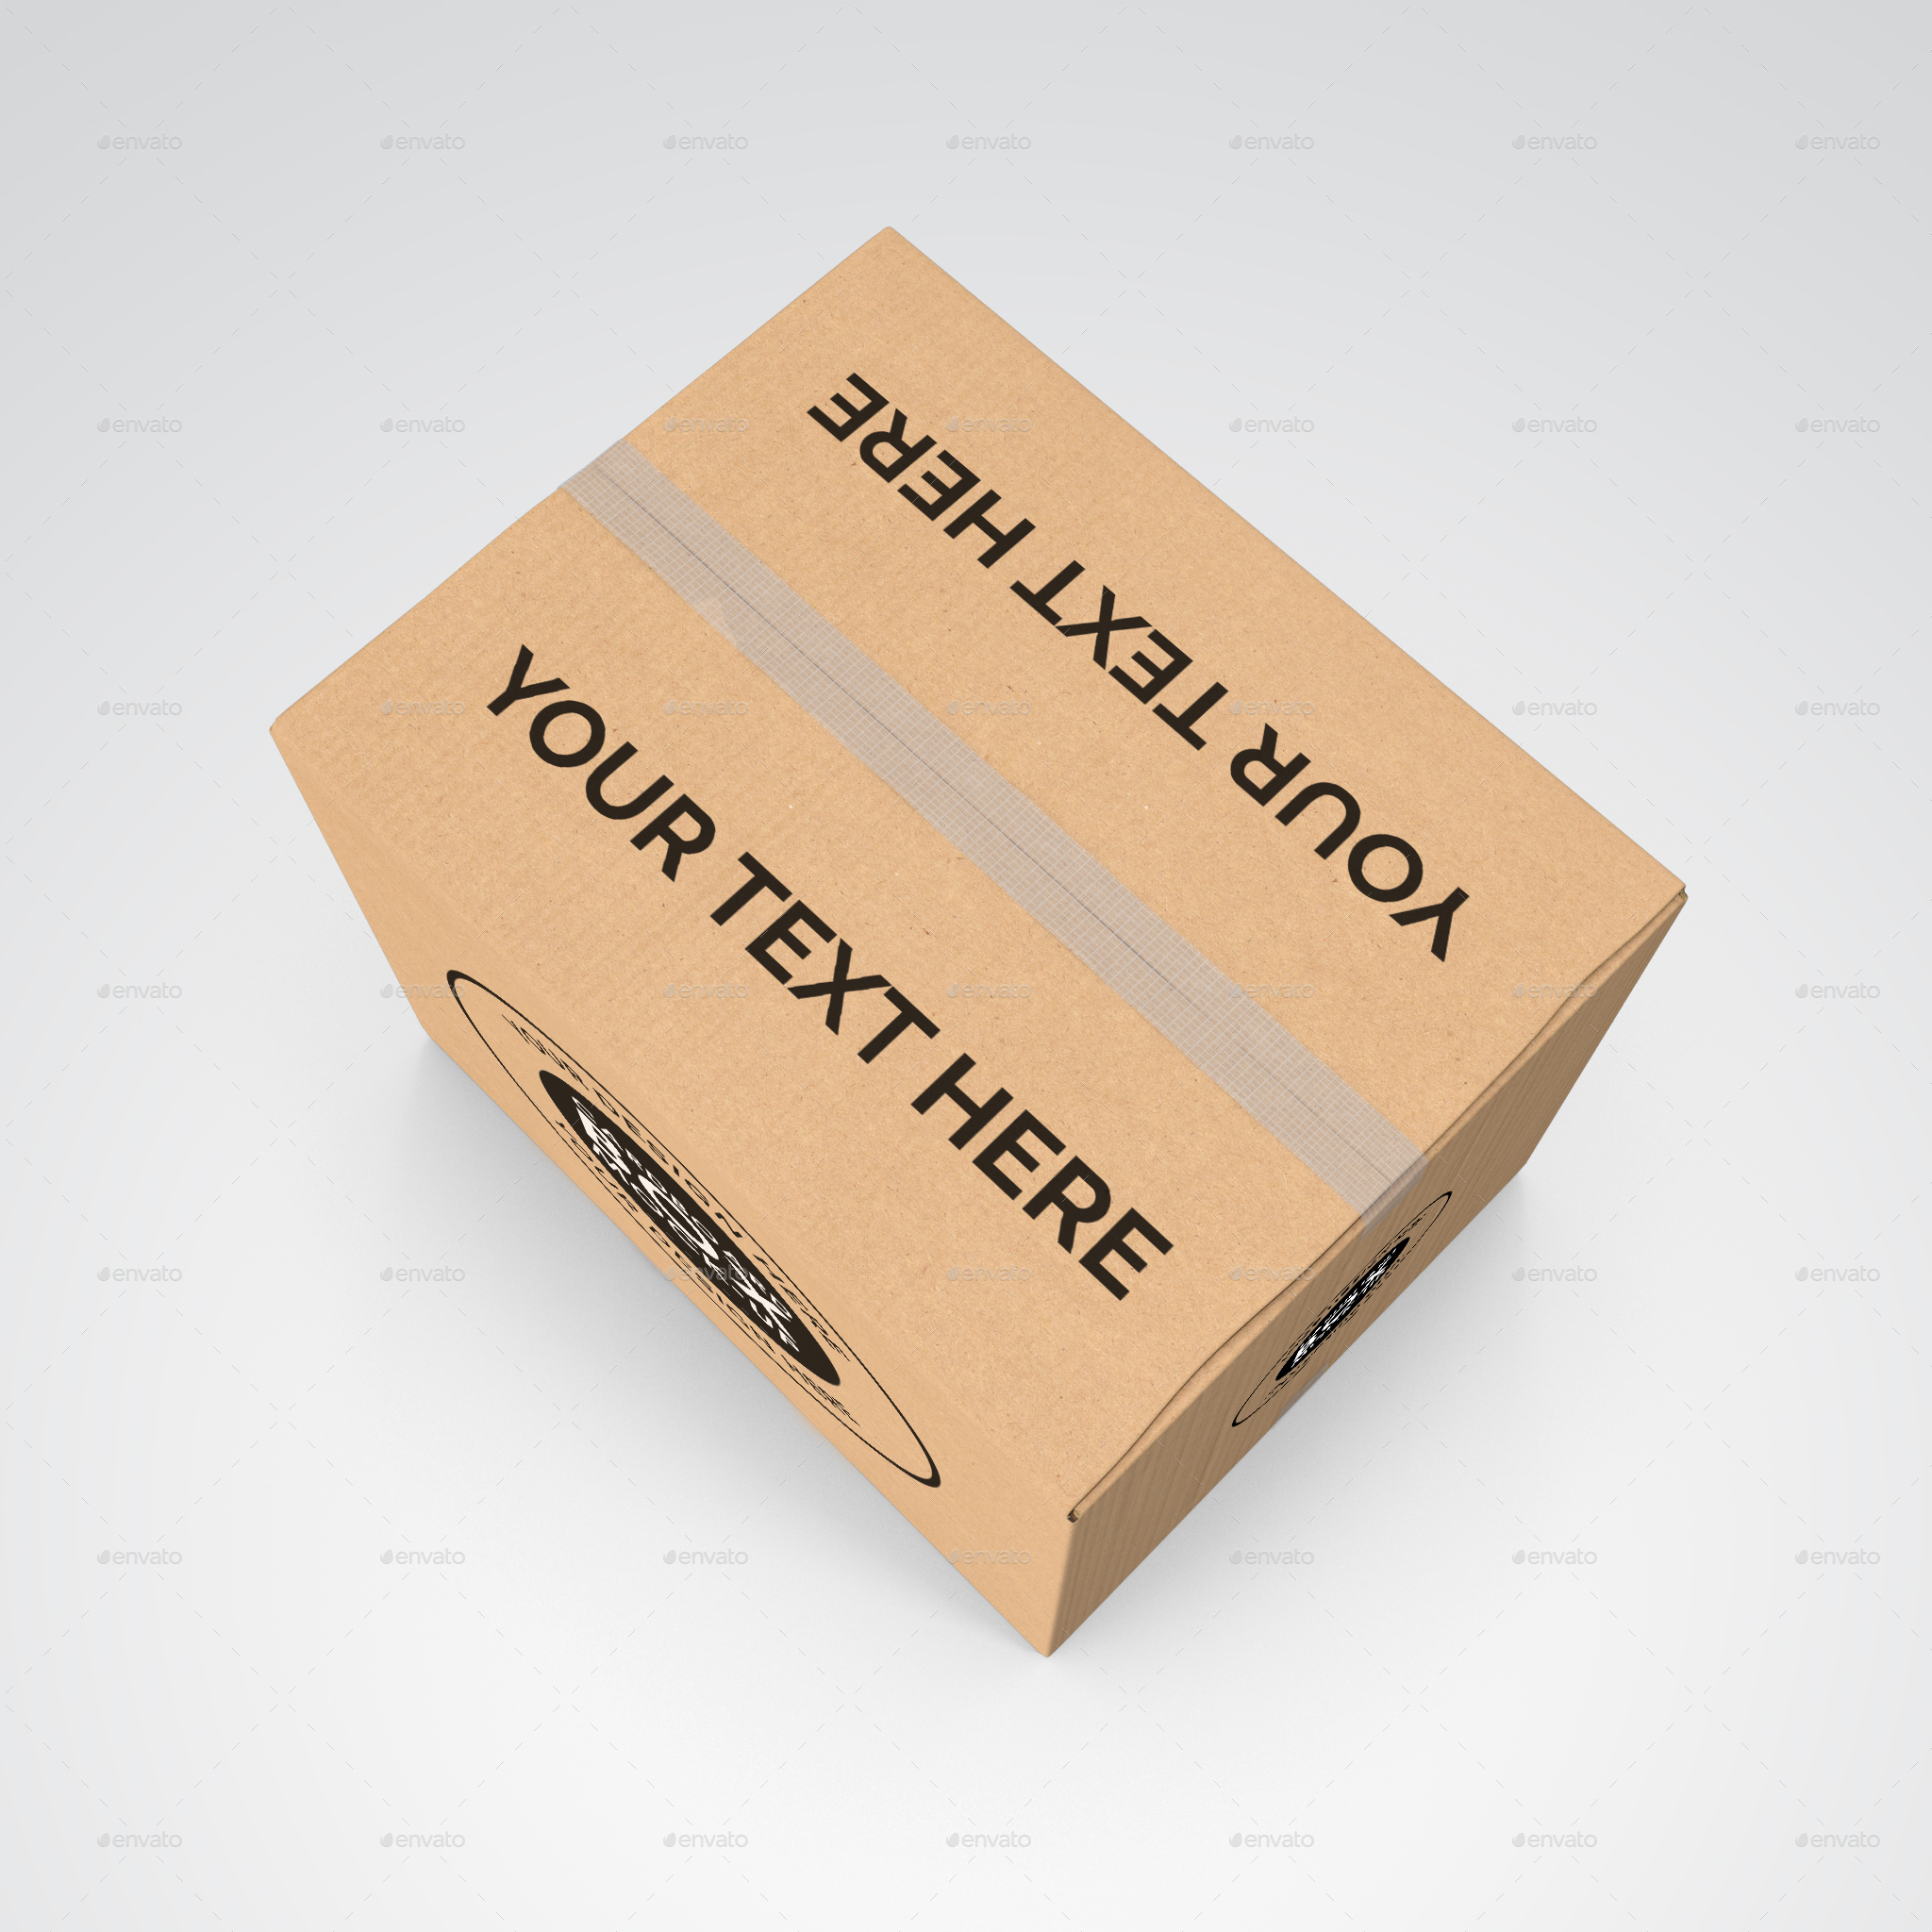 Download Cardboard Box / Carton Mock-up. by nashetyakoub | GraphicRiver